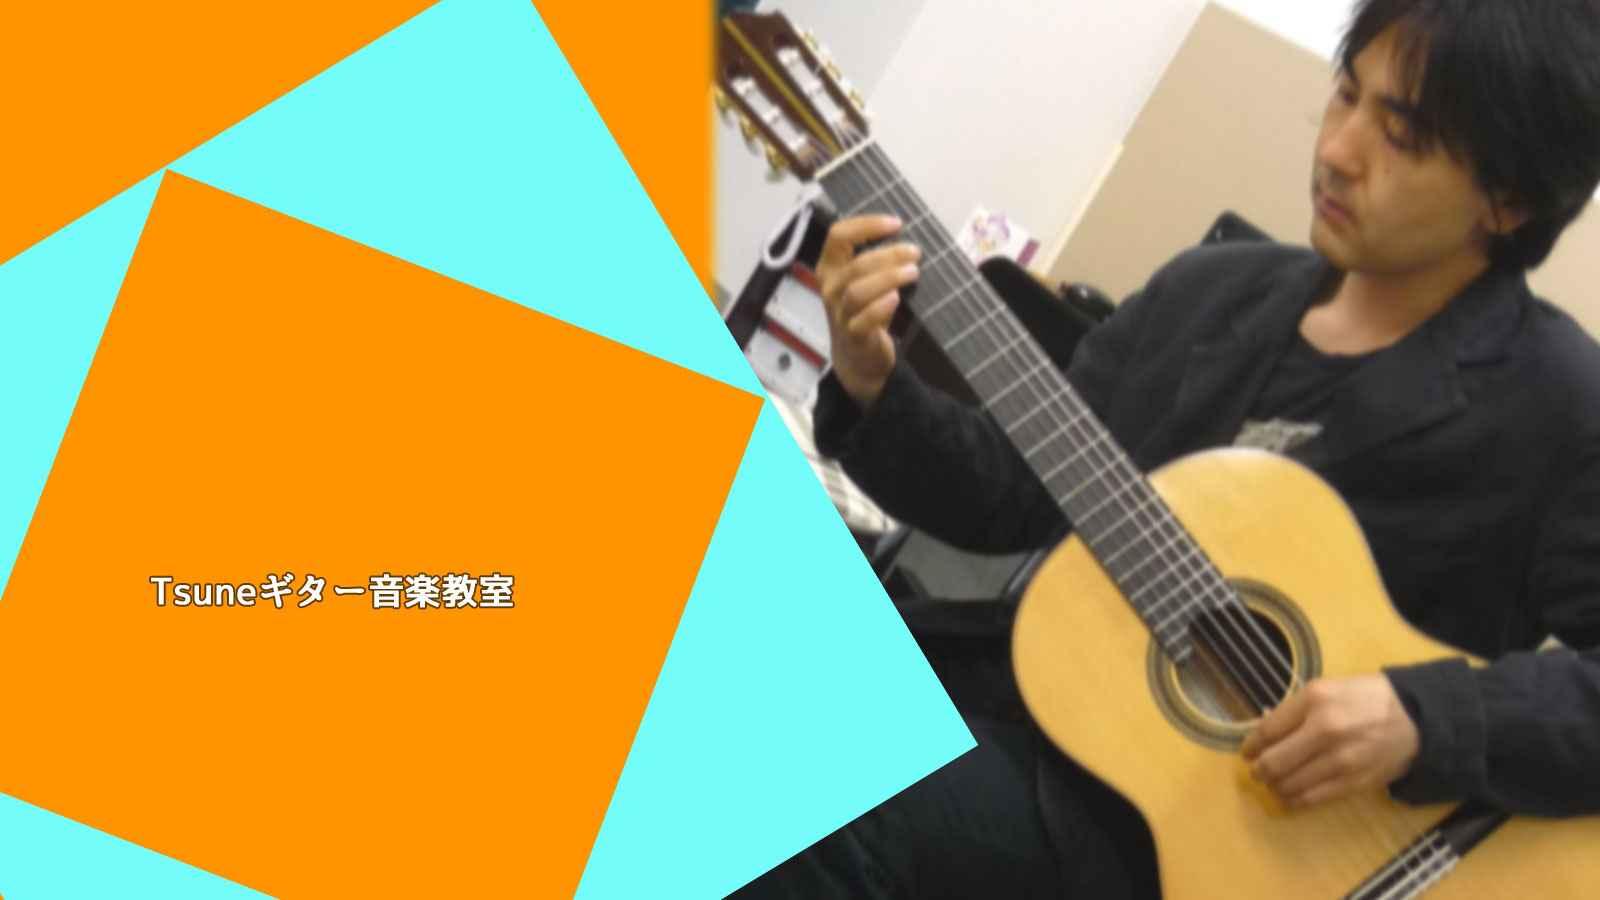 Tsuneギター音楽教室 秋葉原・岩本町校